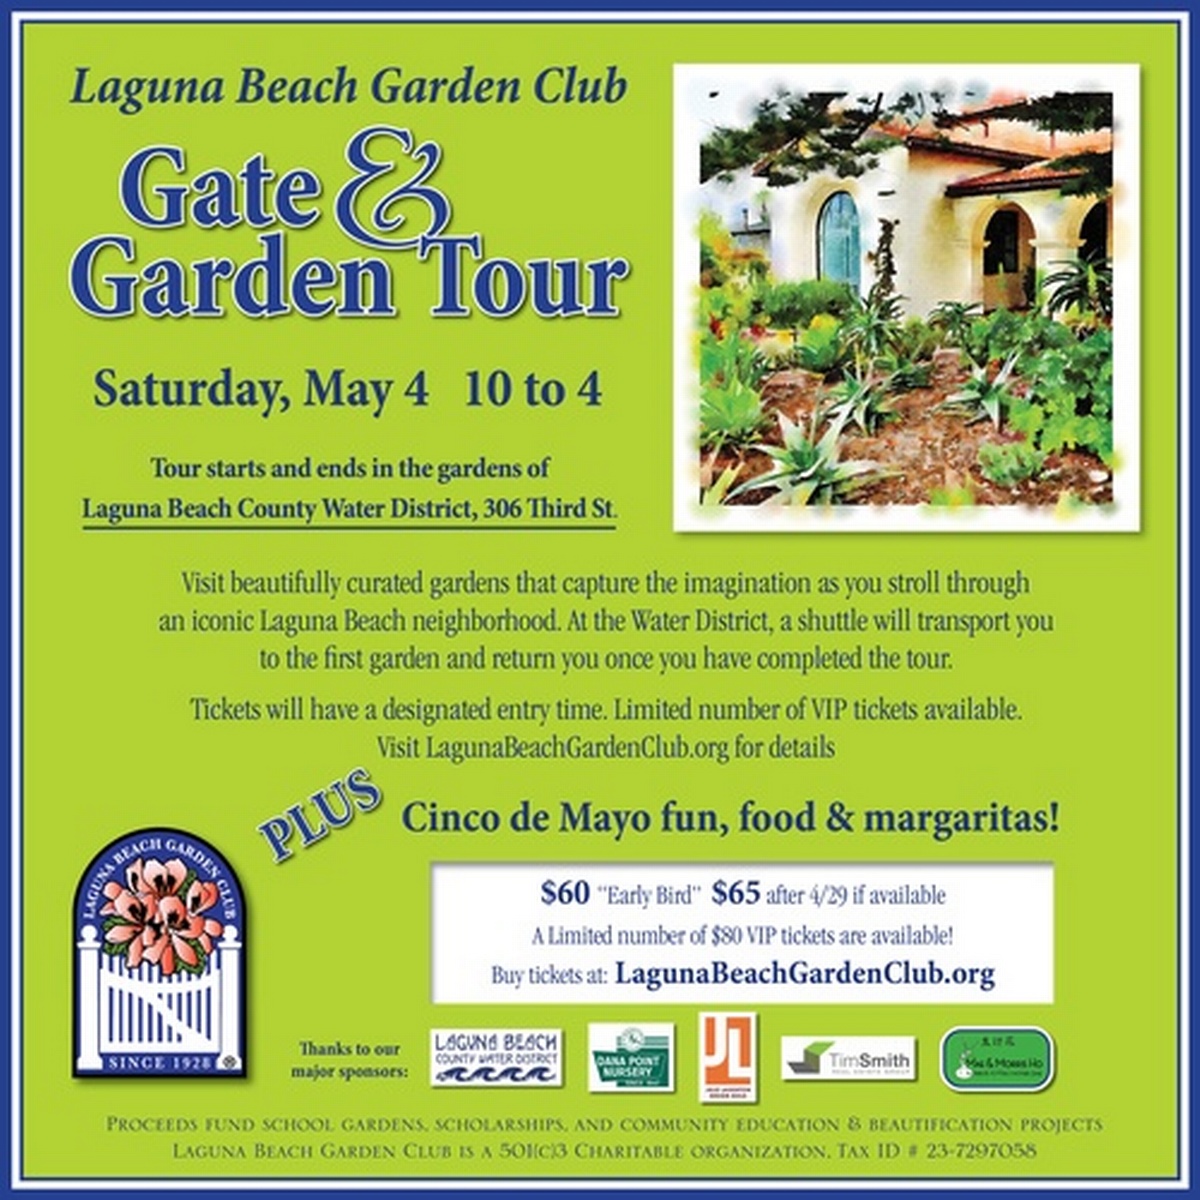 Laguna Beach Garden Club Meeting Friday May 11 2018: Care and